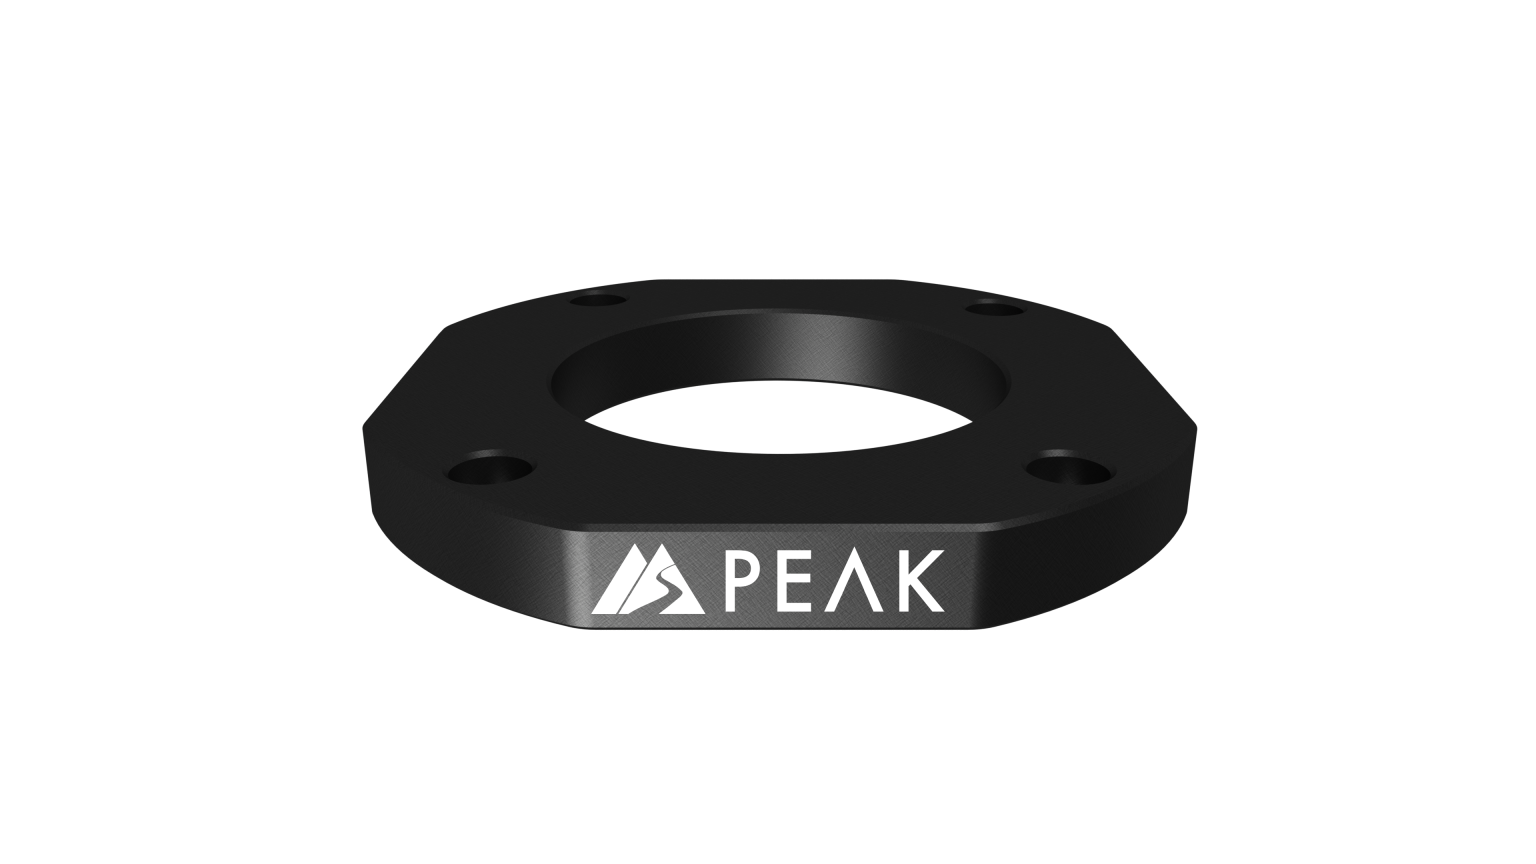 Peak Suspension - 2-Collar Lift Kit - Toyota Tacoma (2024+)